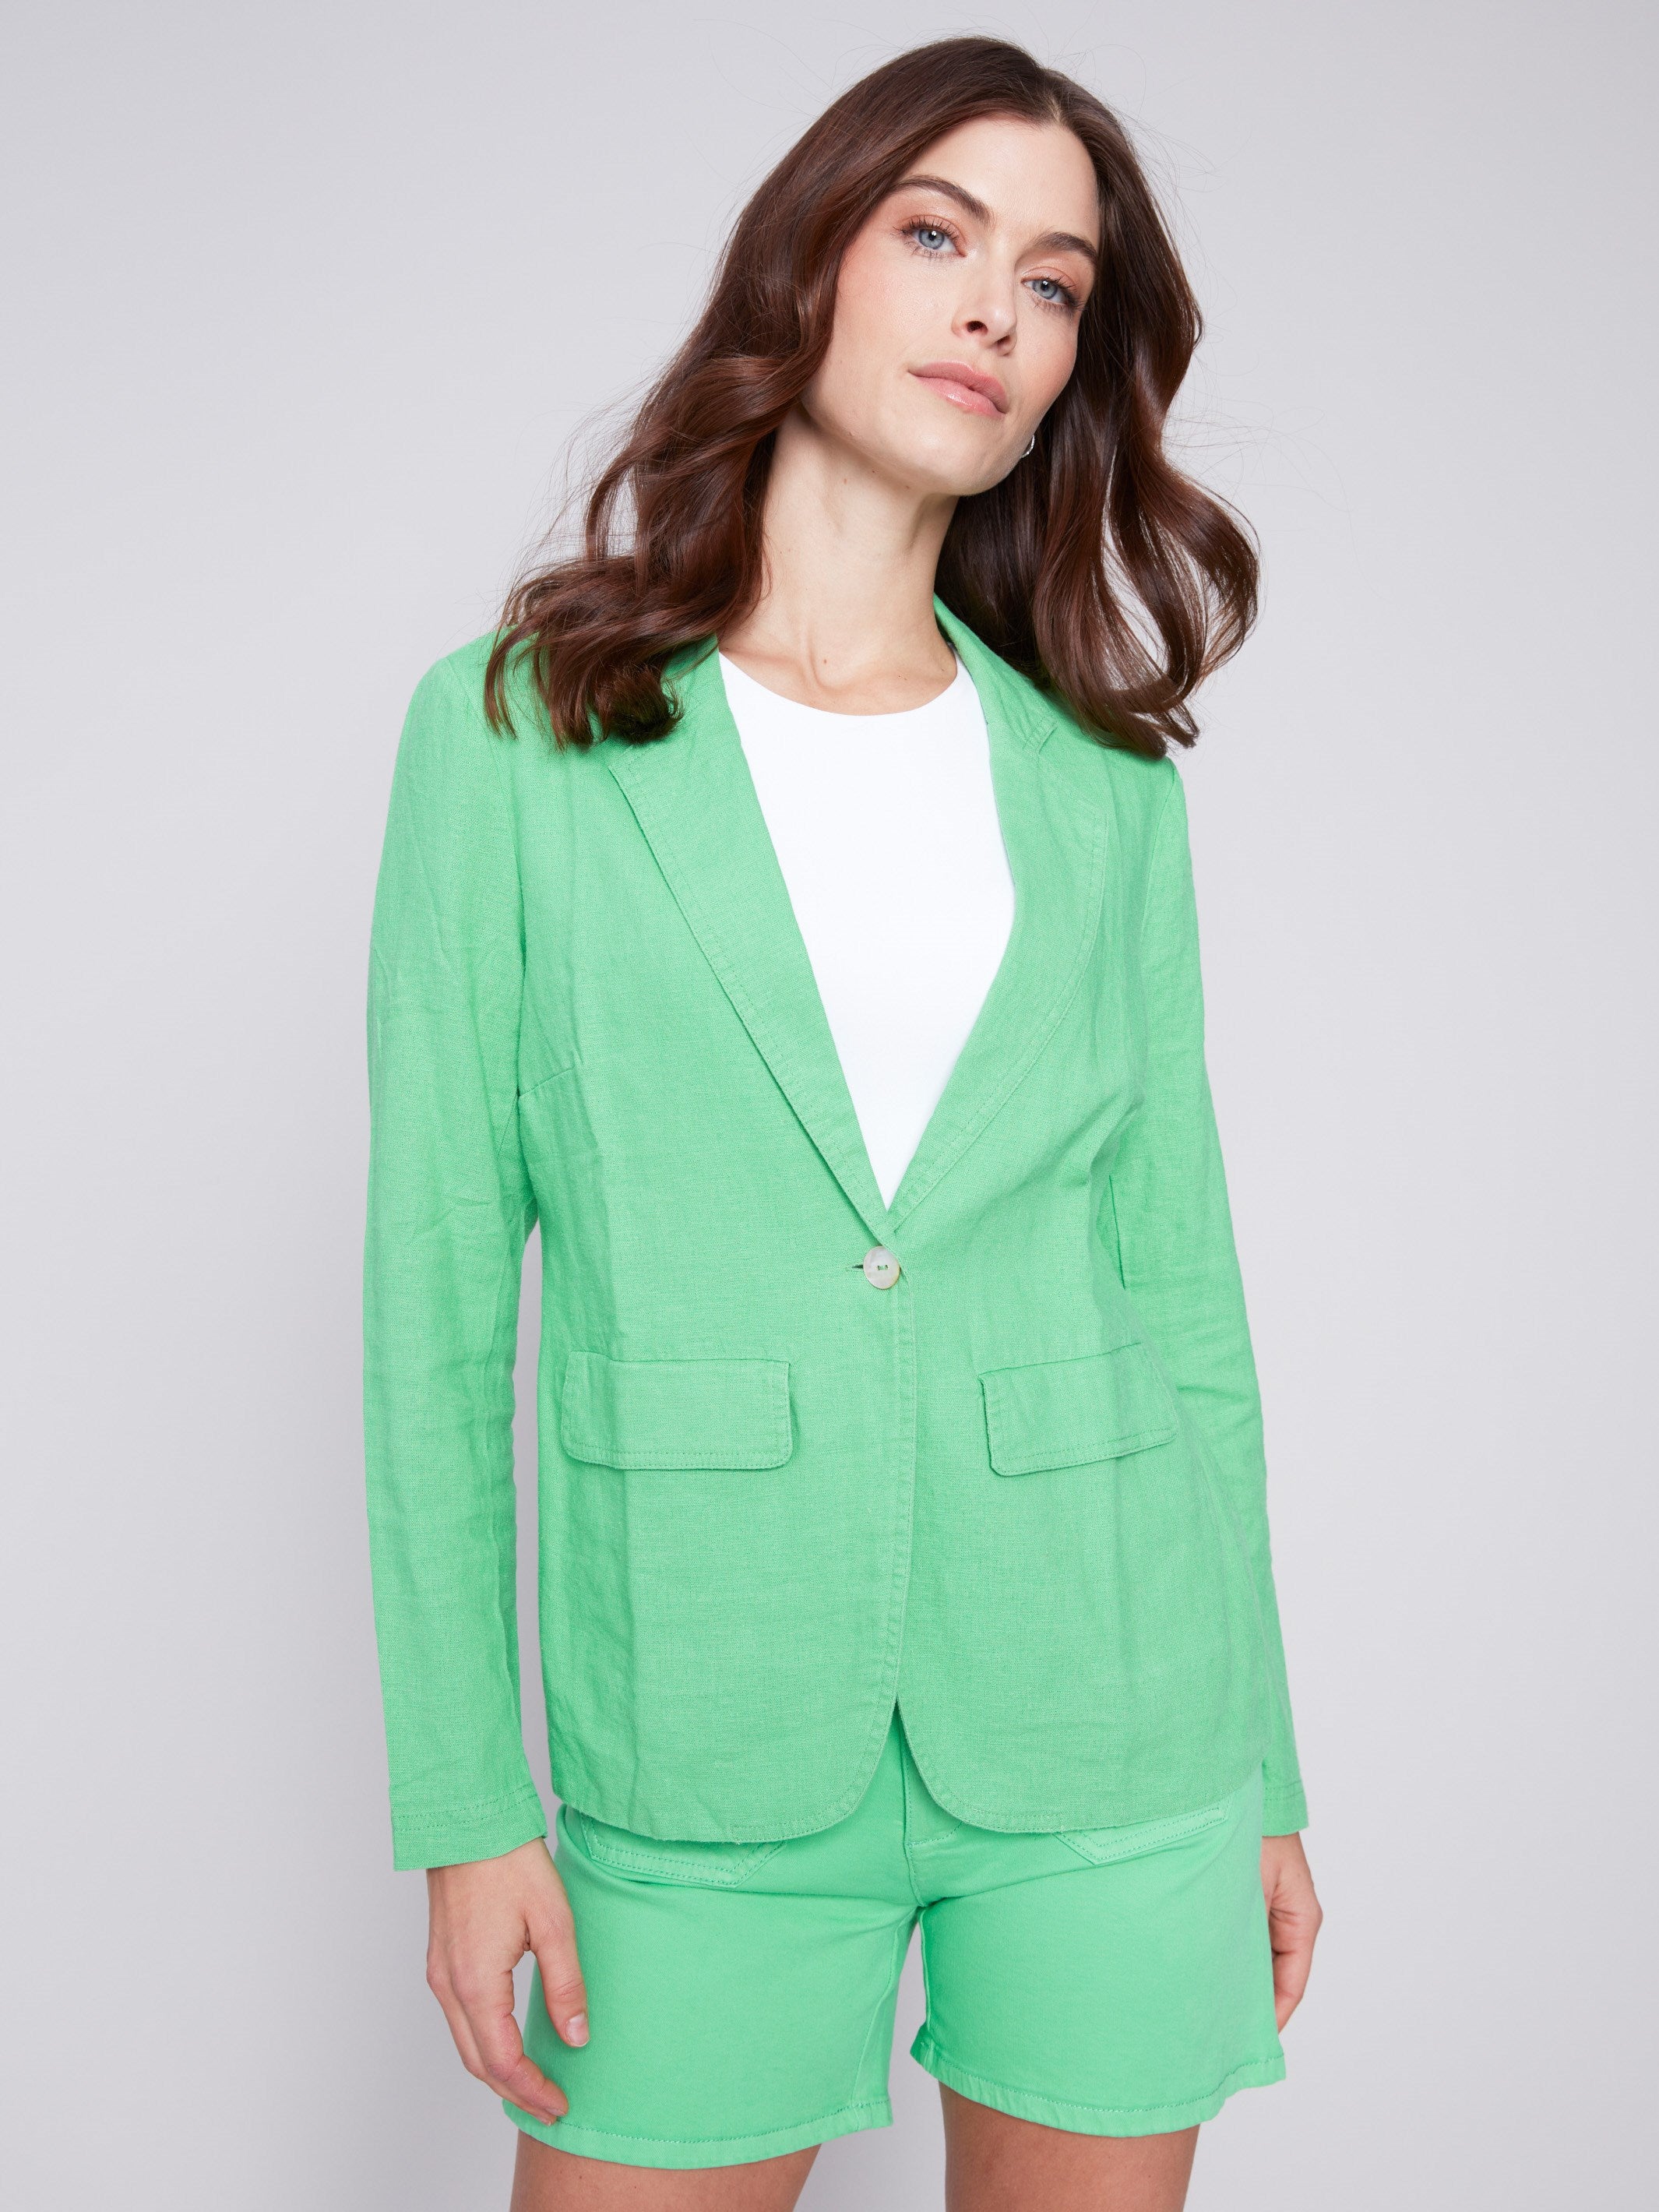 Light Linen Blend Blazer - Emerald - Charlie B Collection Canada - Image 3